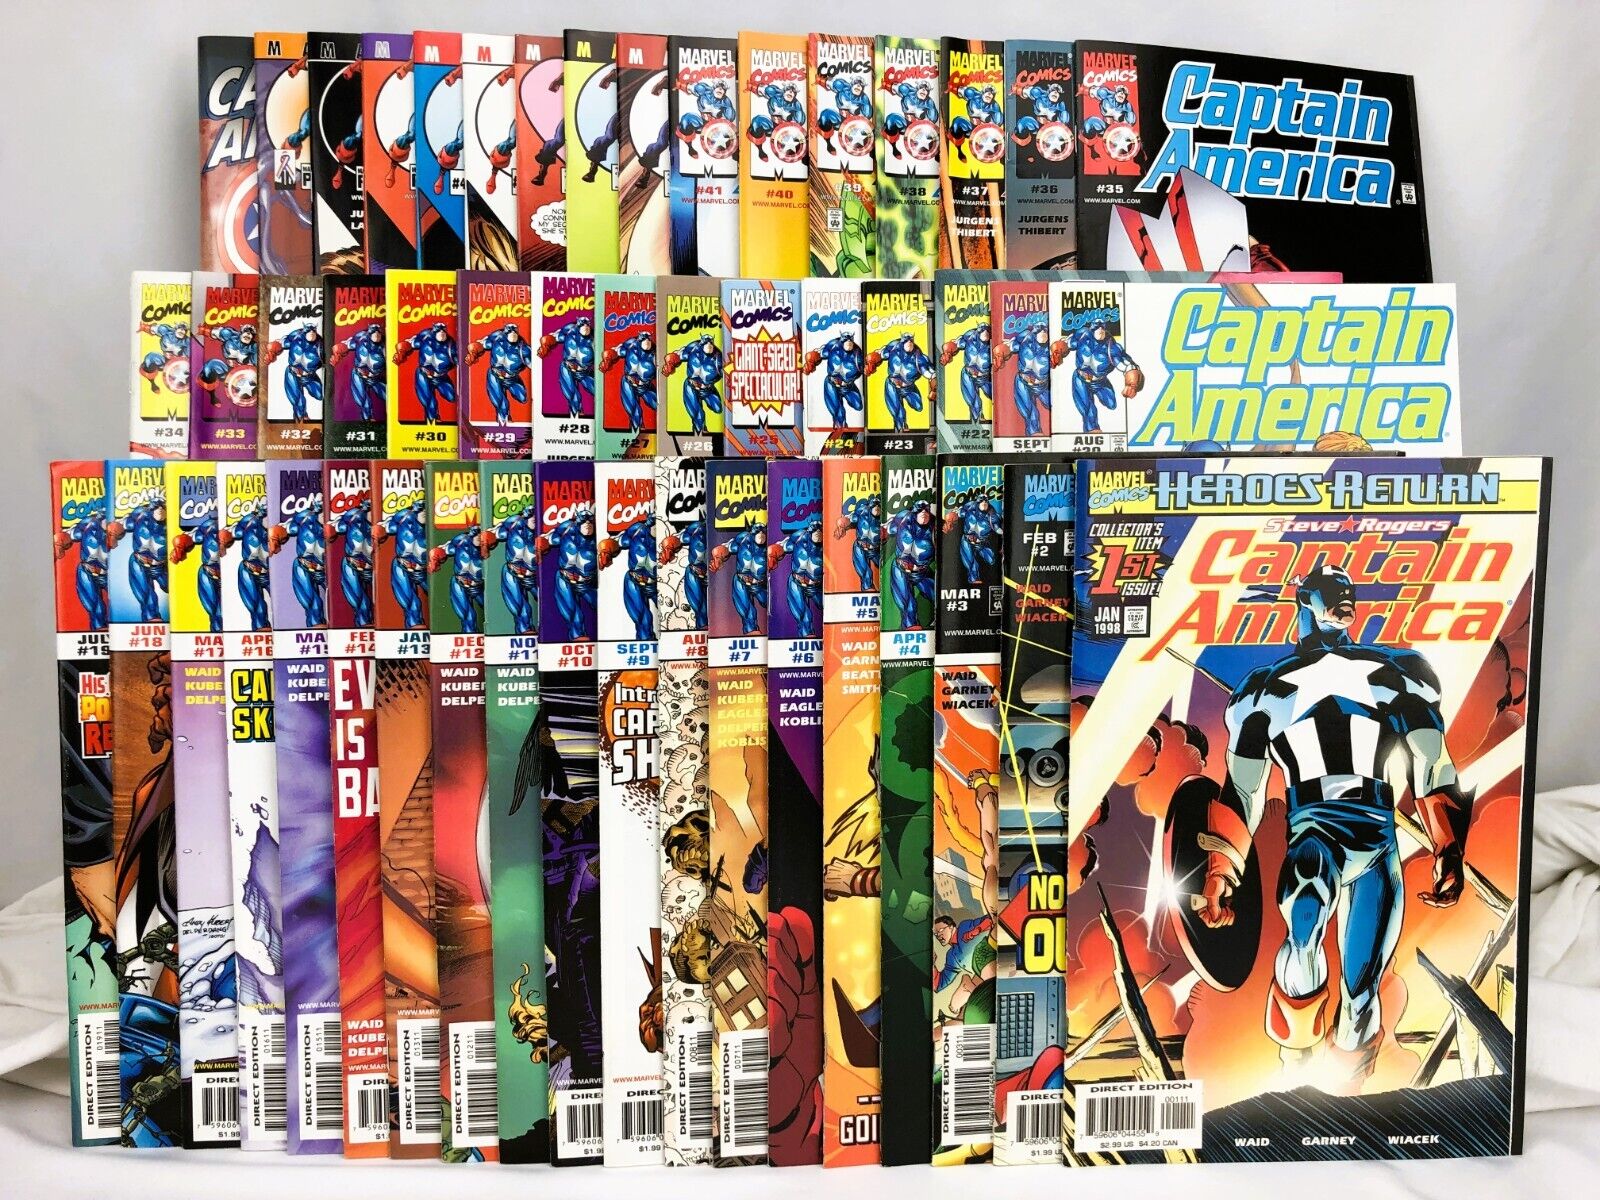 Captain America #1-50 (1998-2002, Marvel) Complete Series